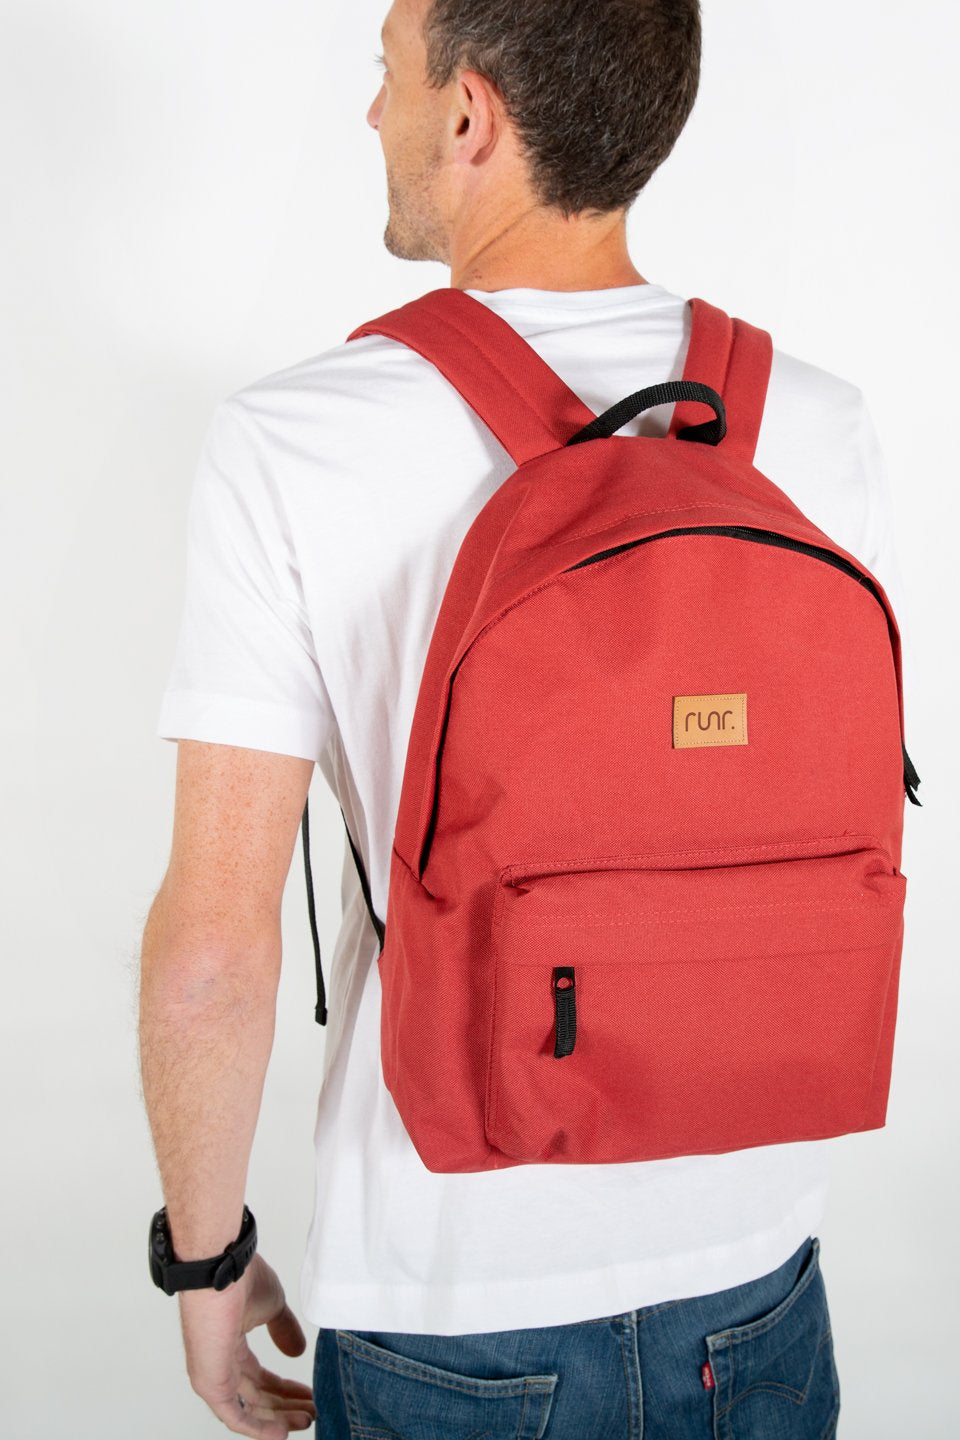 Runr Go Backpack - Red